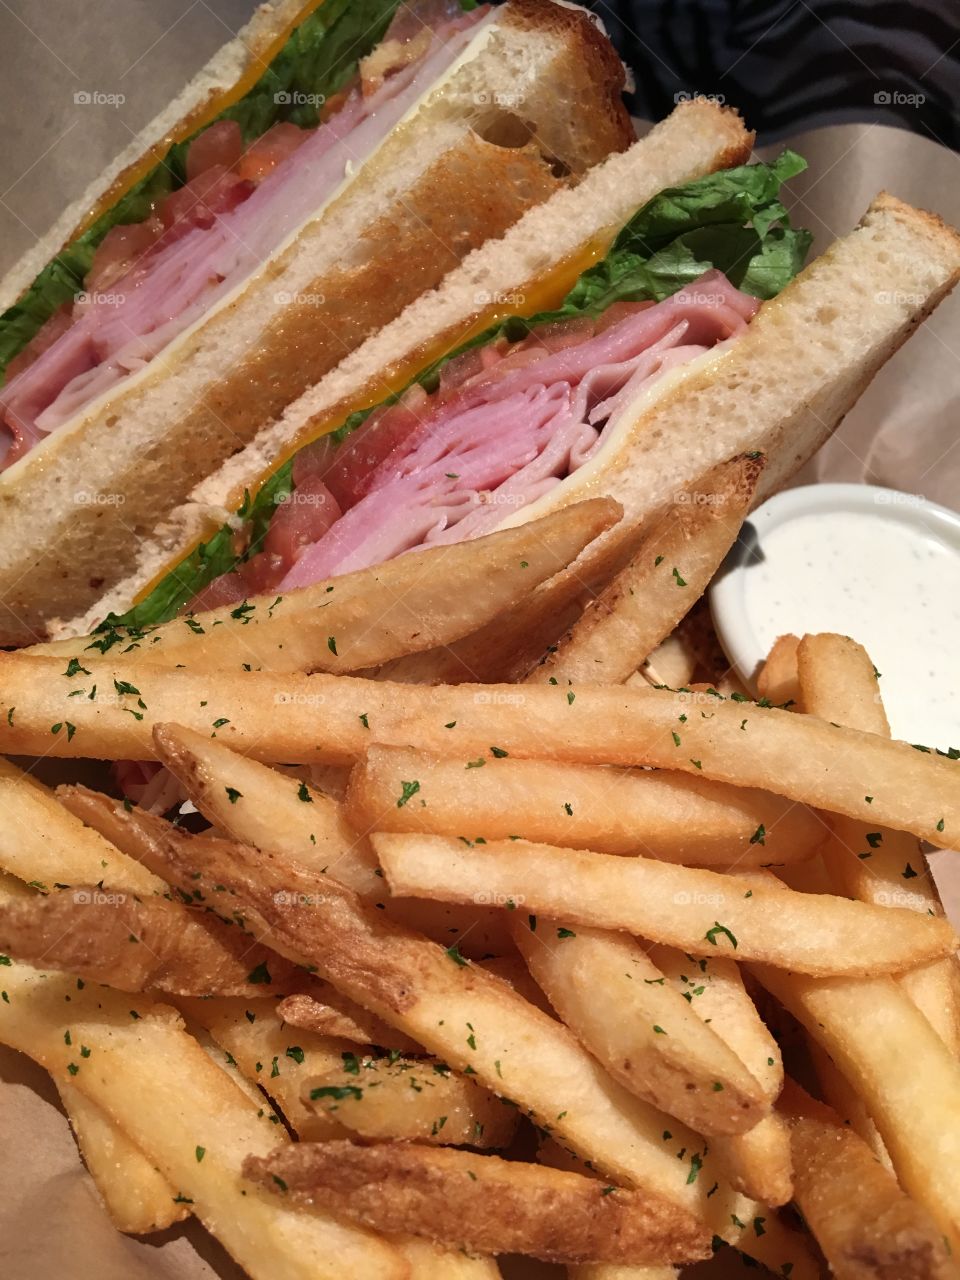 Club Sandwich and Fries